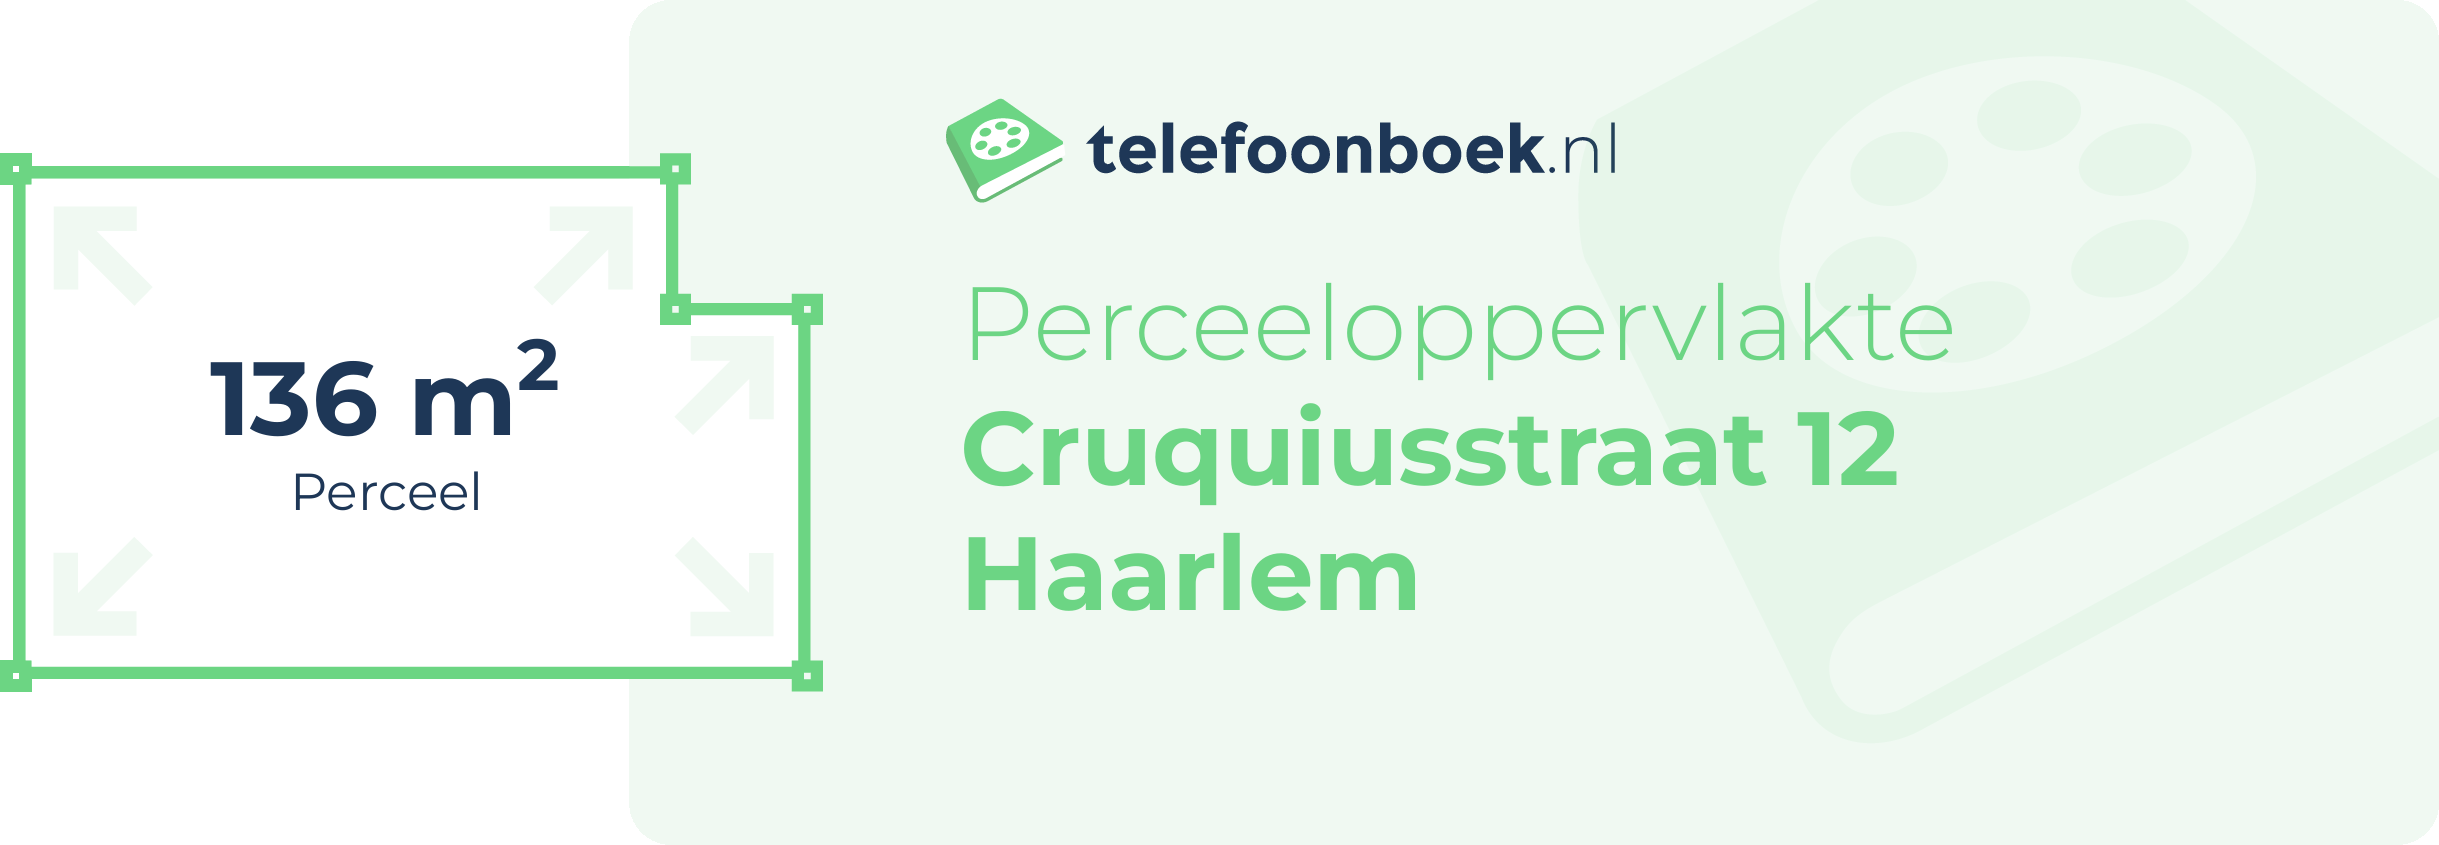 Perceeloppervlakte Cruquiusstraat 12 Haarlem